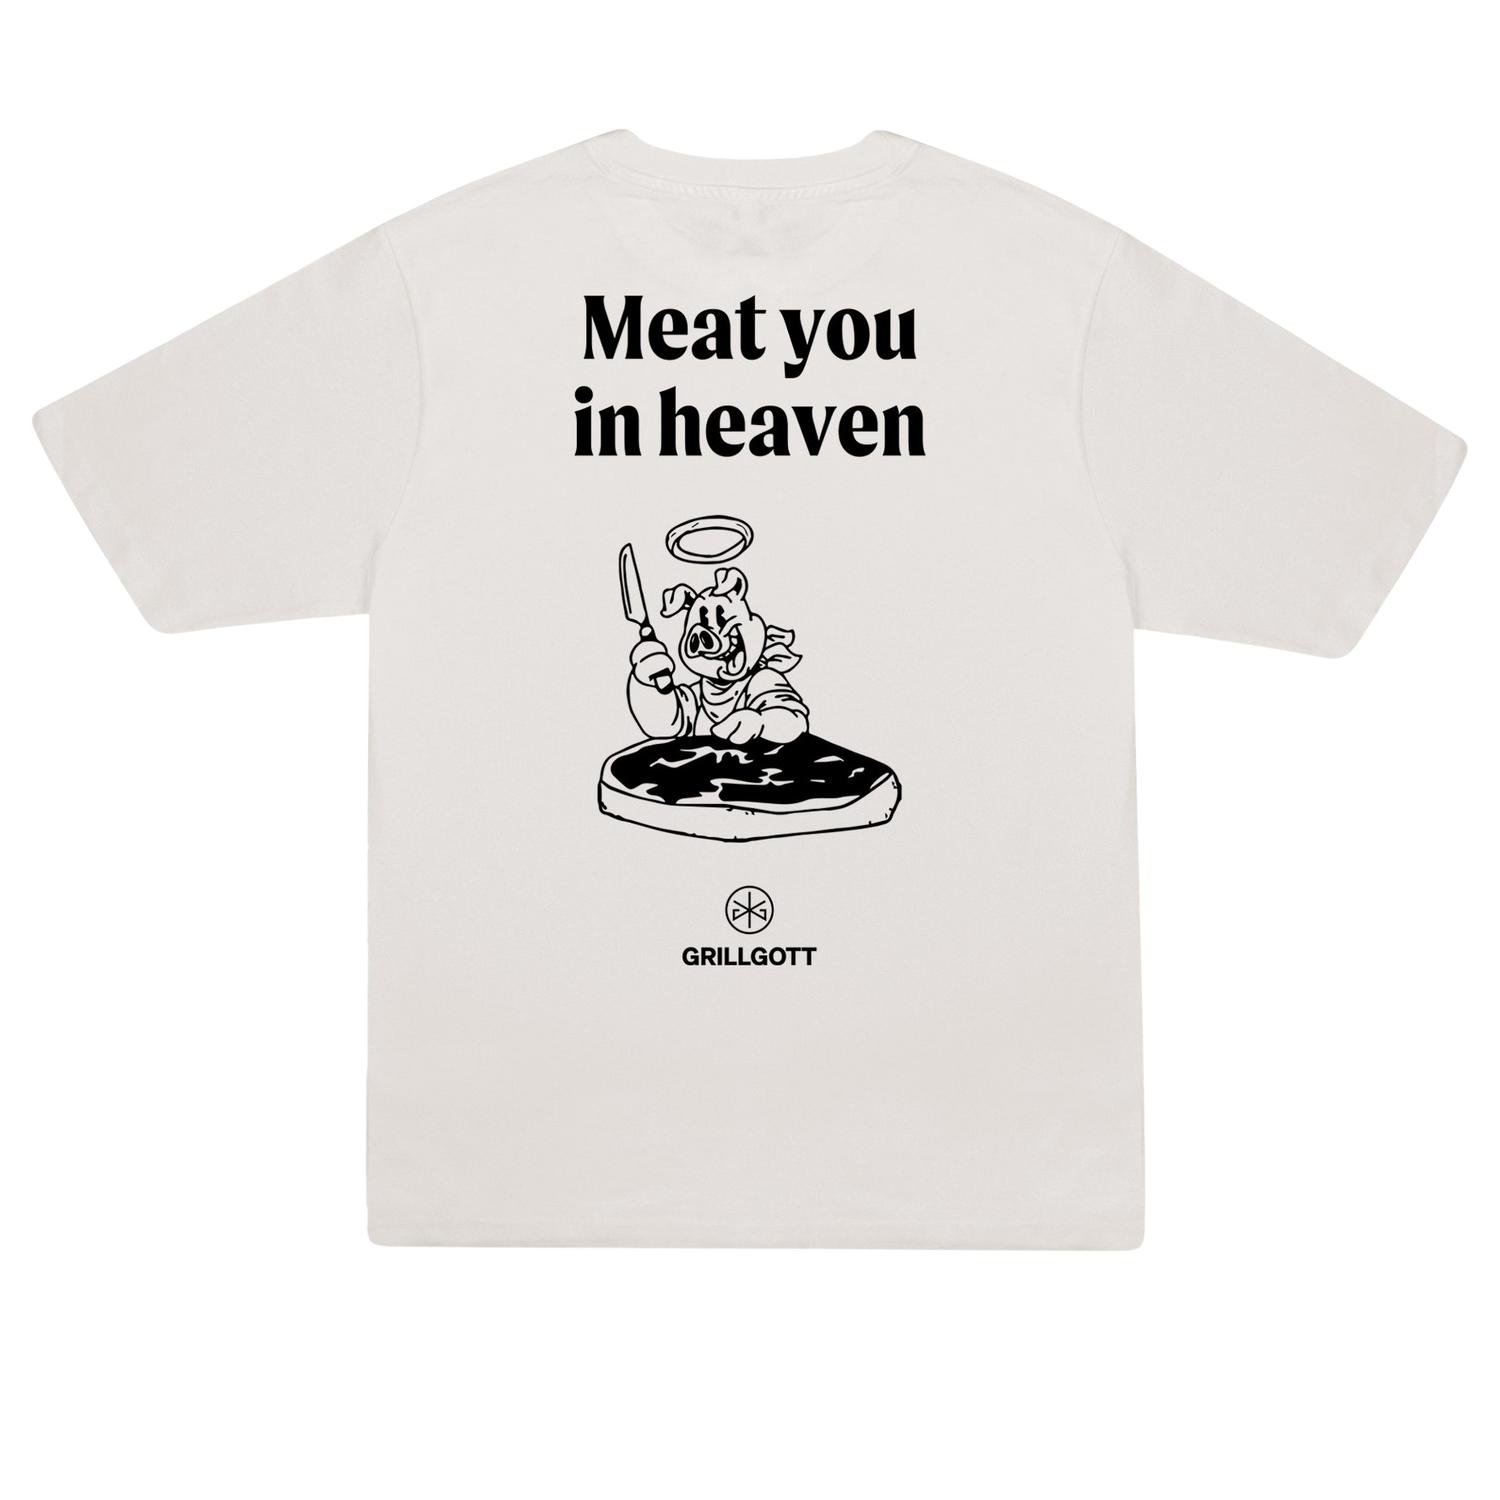 Grillgott T-Shirt XS "Meat you in heaven"